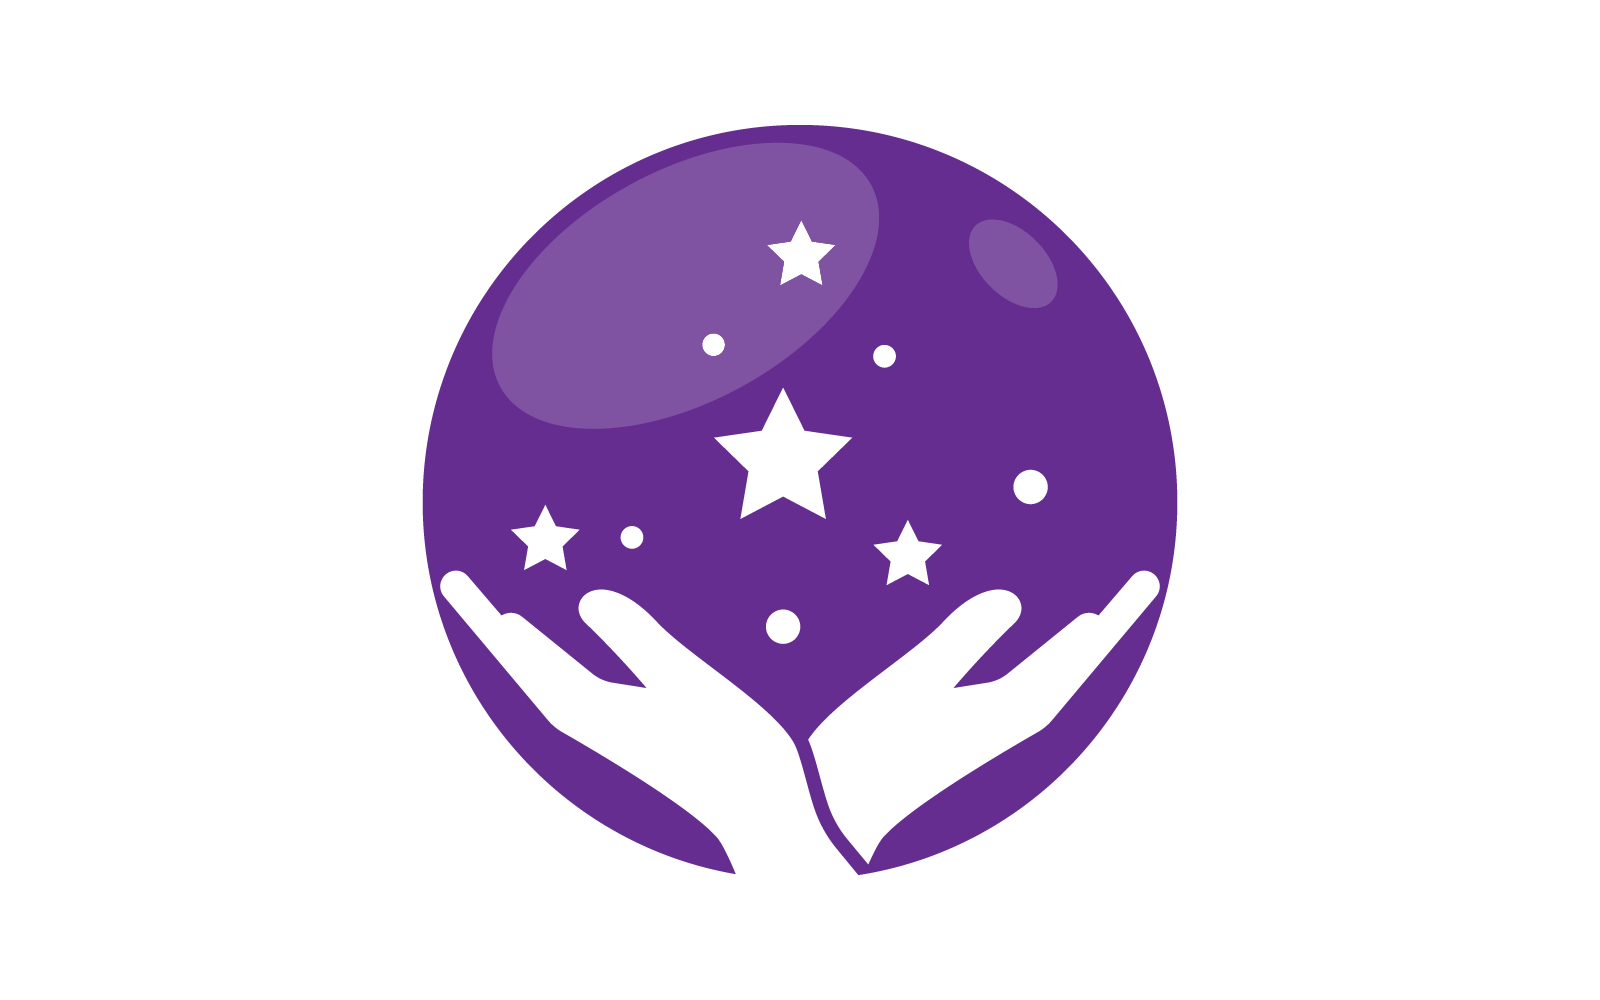 Hand and star logo illustration vector